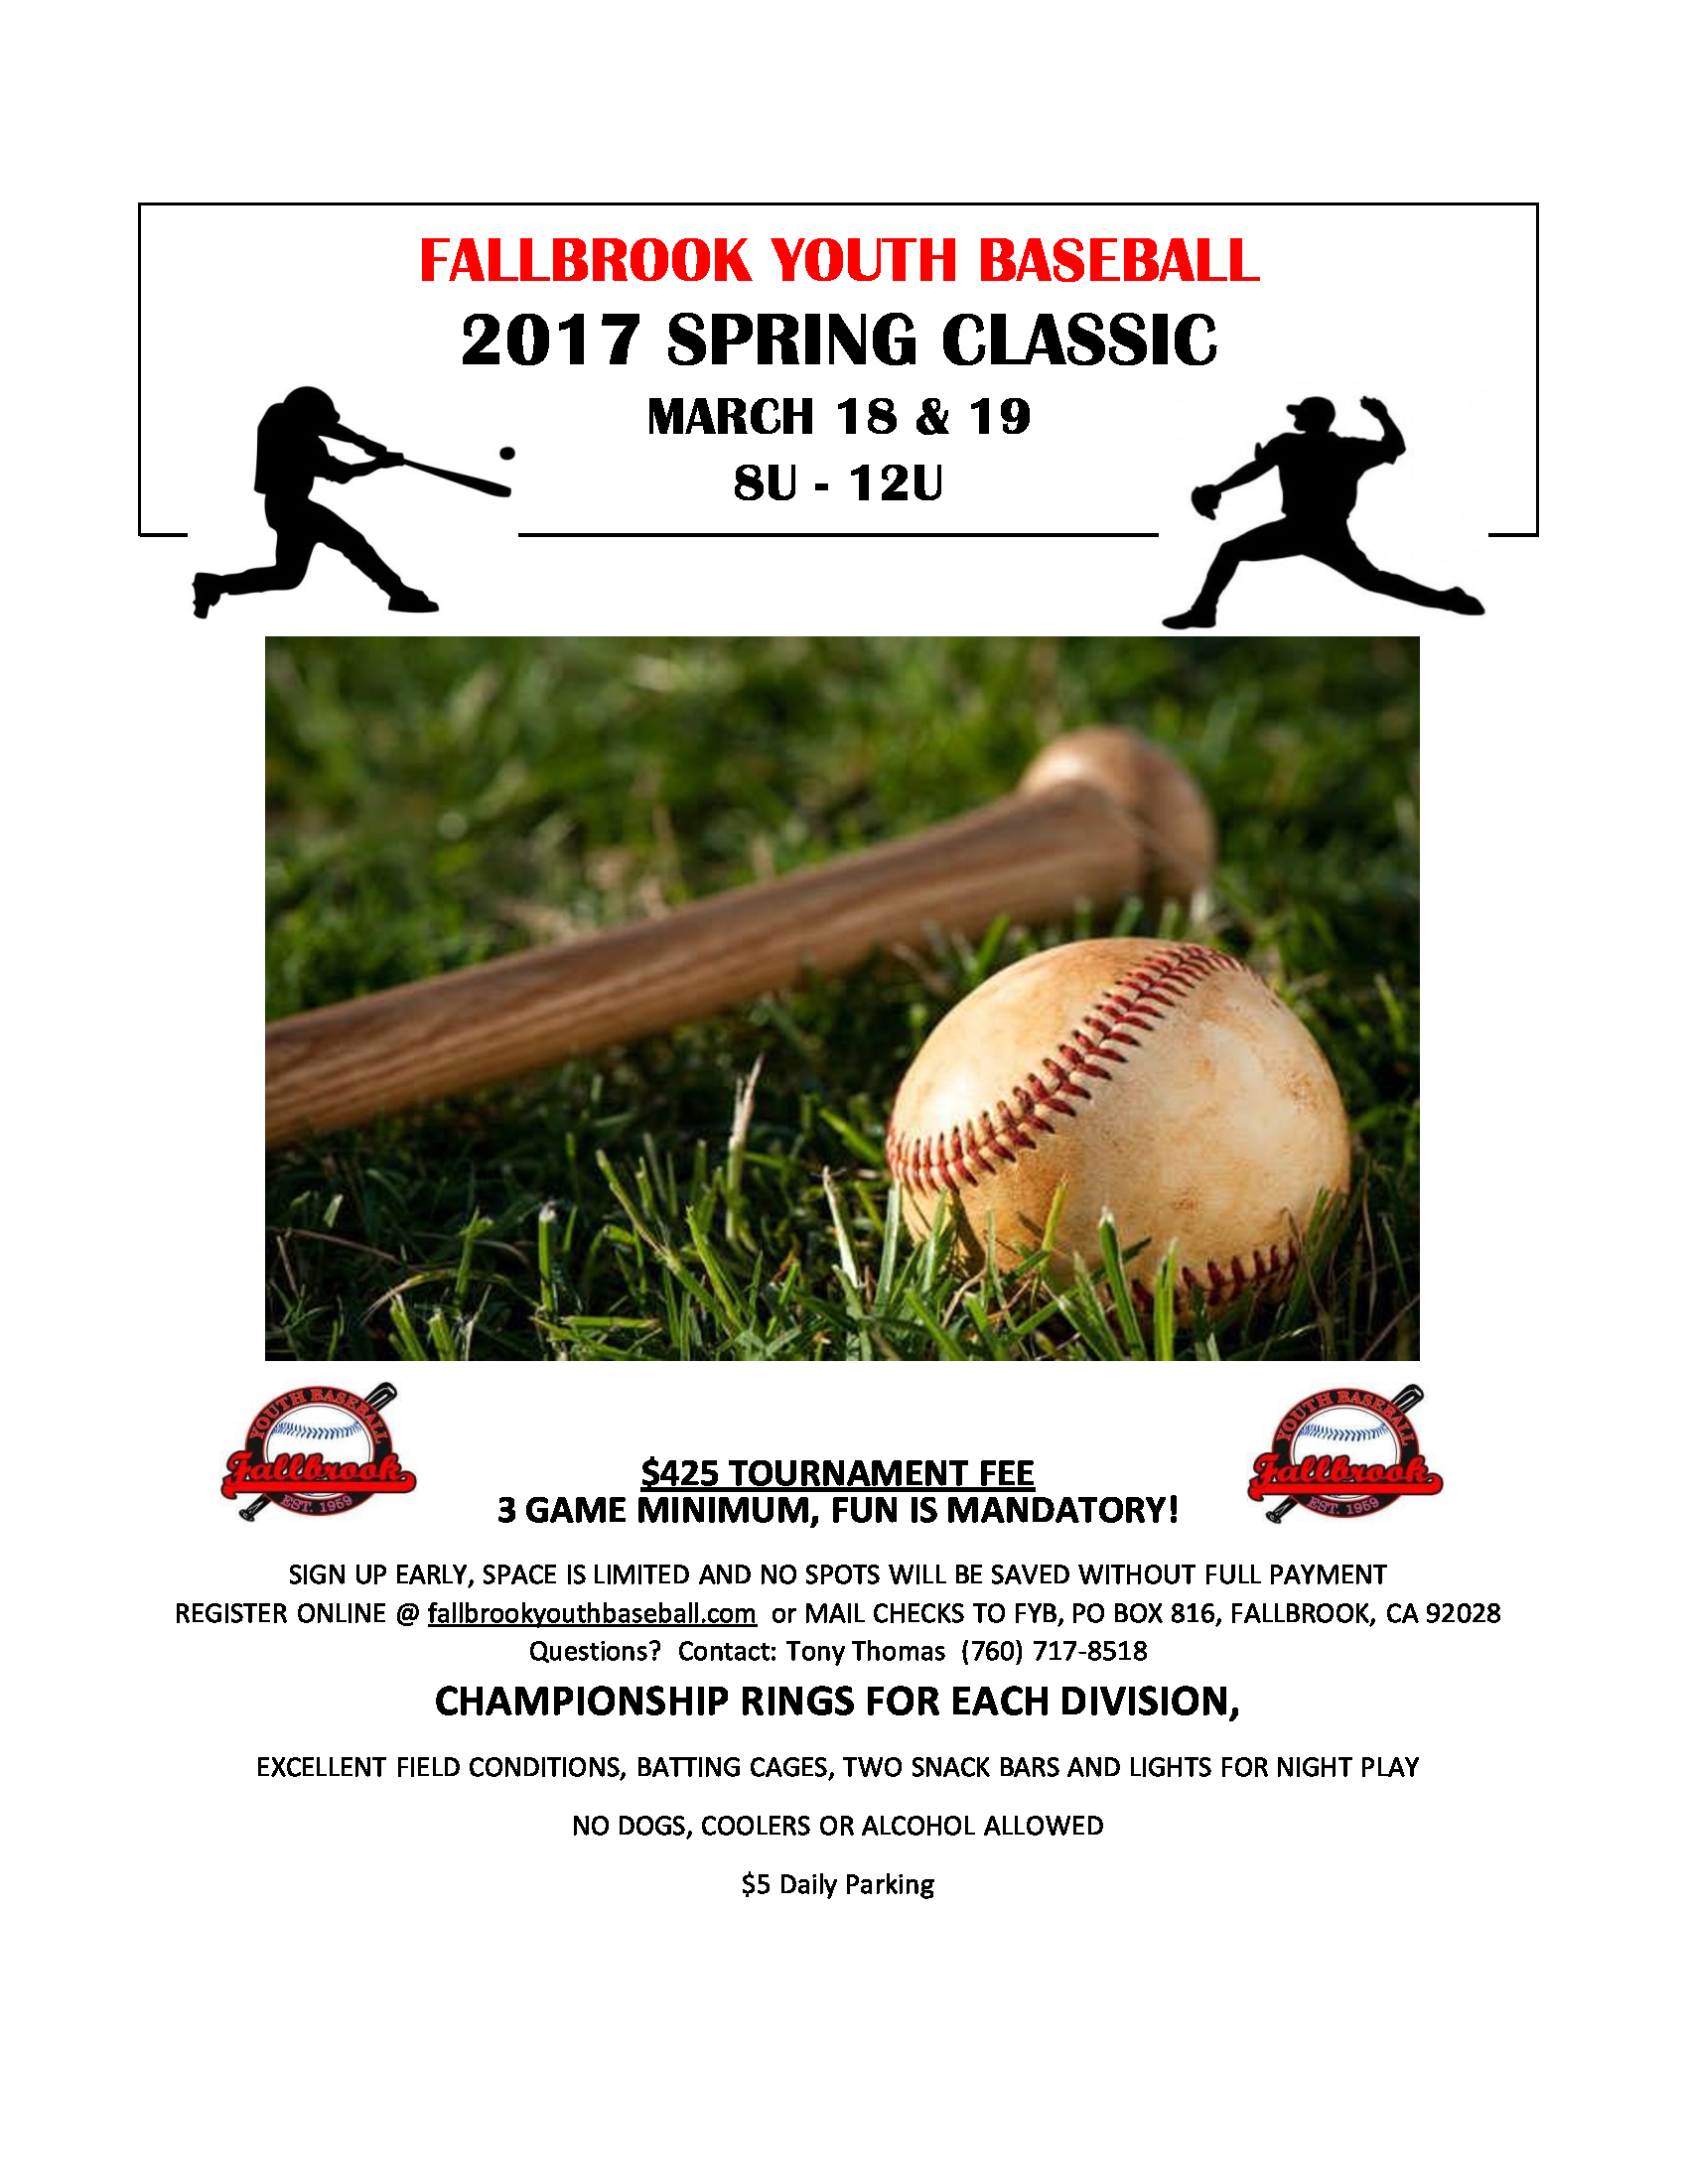 Fallbrook Youth Baseball Tournaments